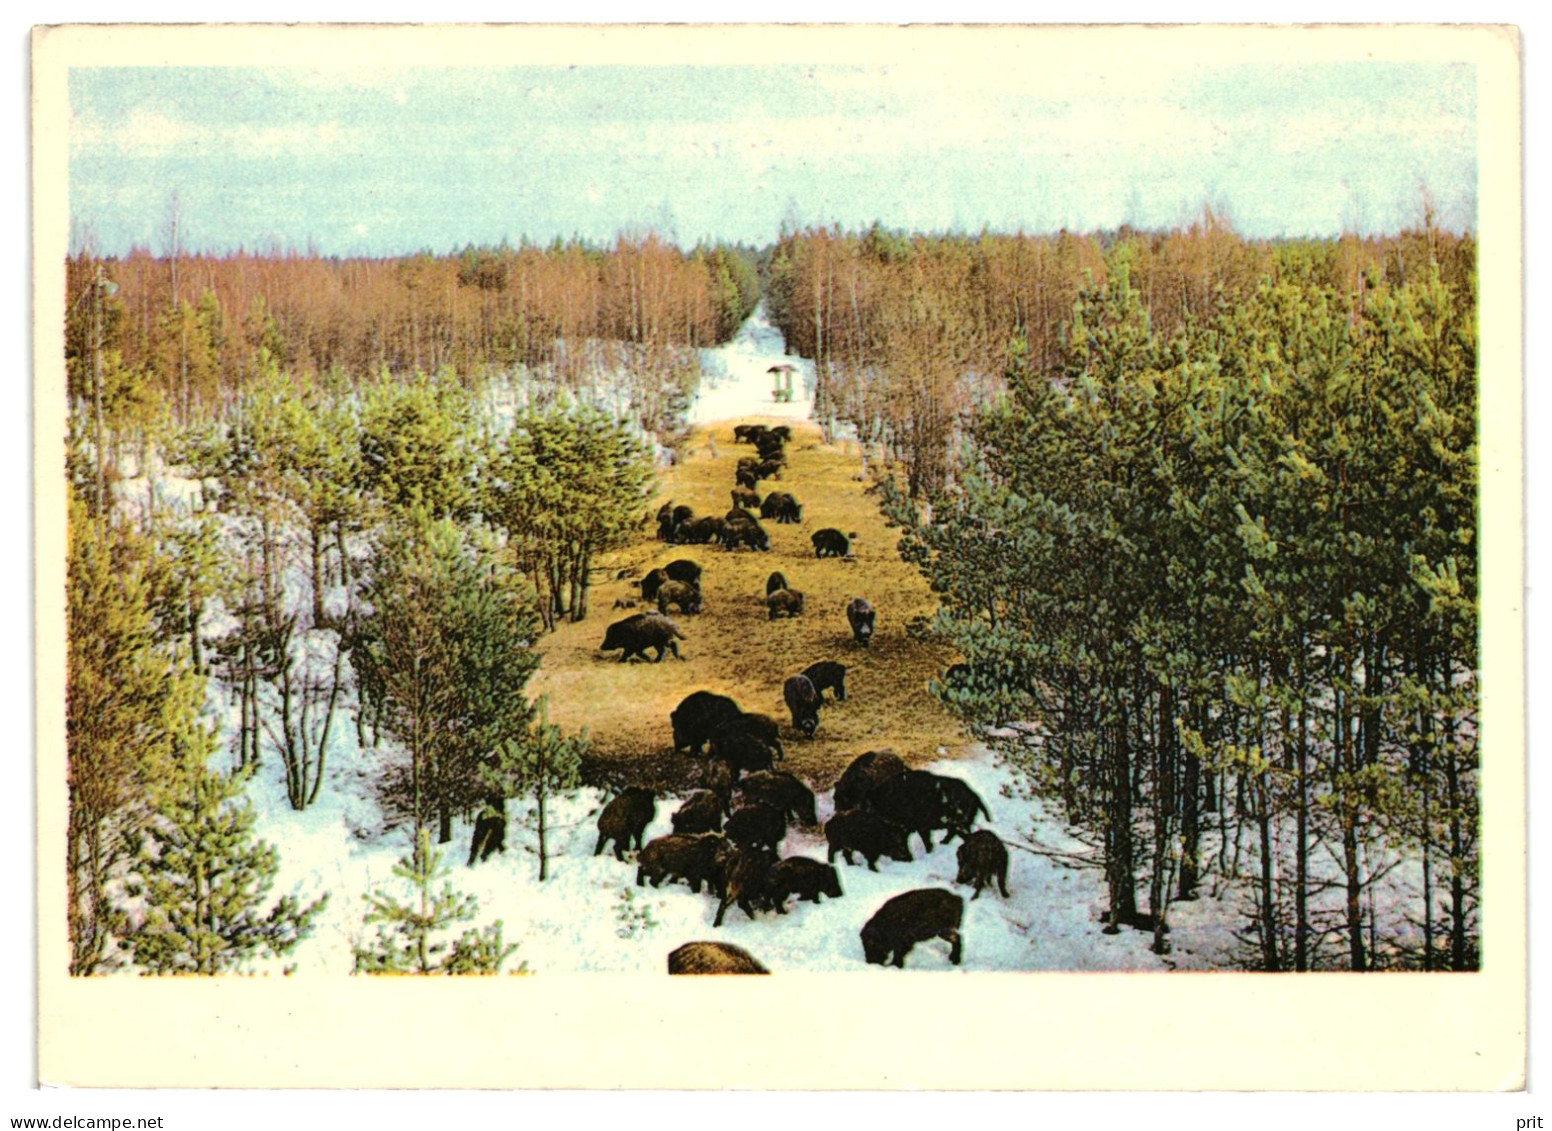 The Herd Of Wild Boars, Pigs, Winter Snow. Unused Postcard. Publisher Eesti Raamat, Tallinn Estonia 1983 - Schweine